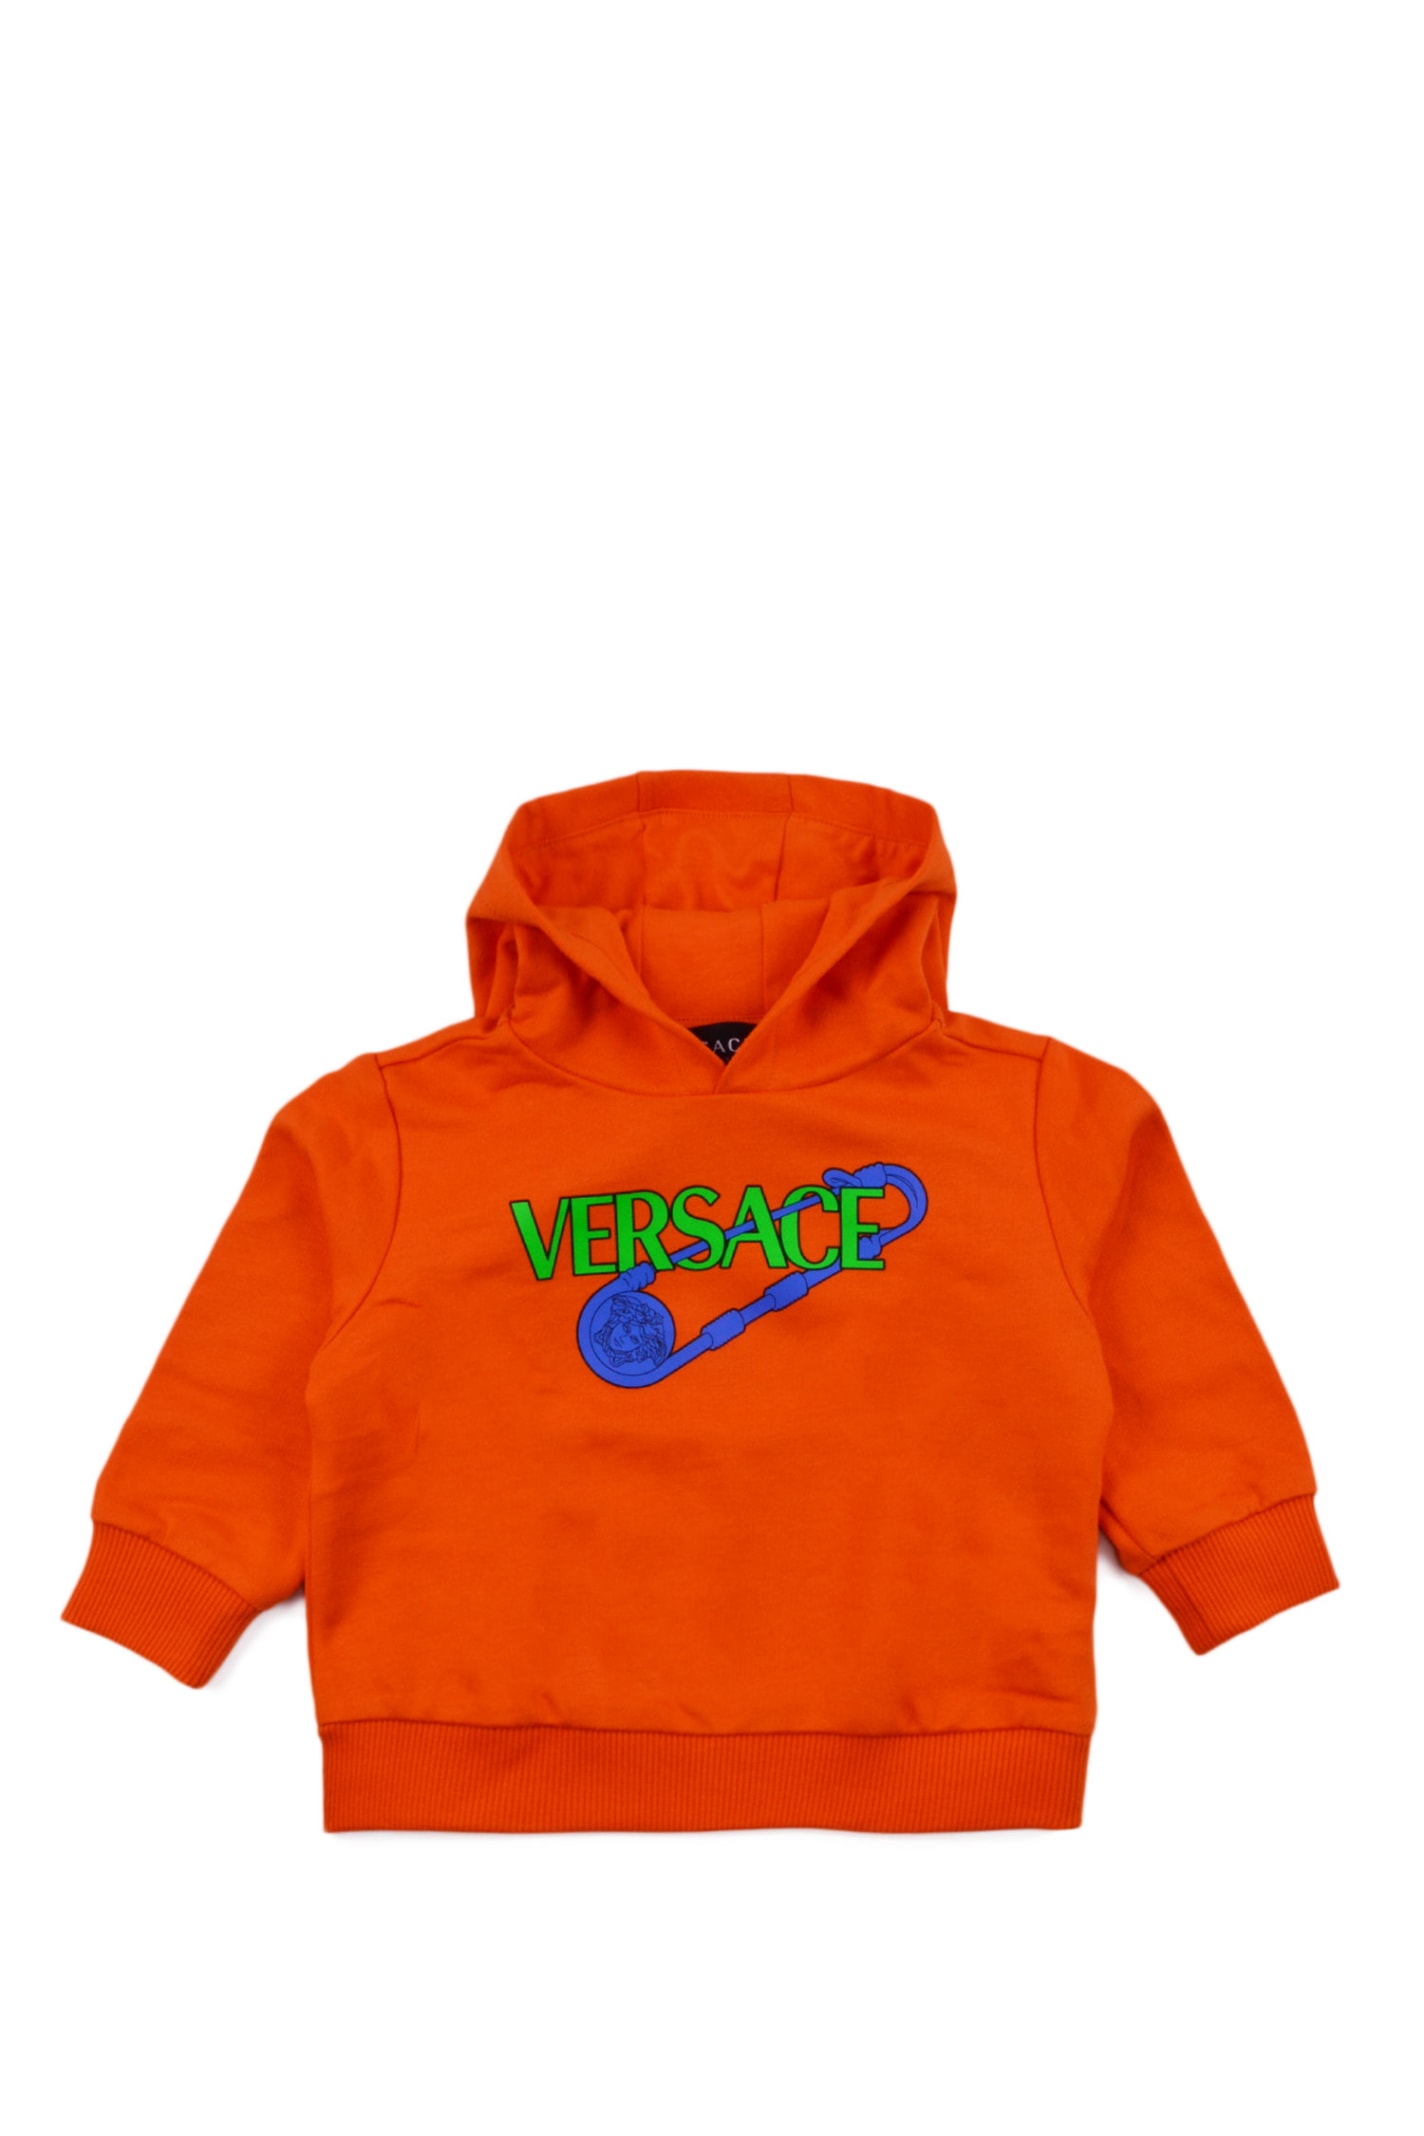 Versace Cotton Sweatshirt With Hood